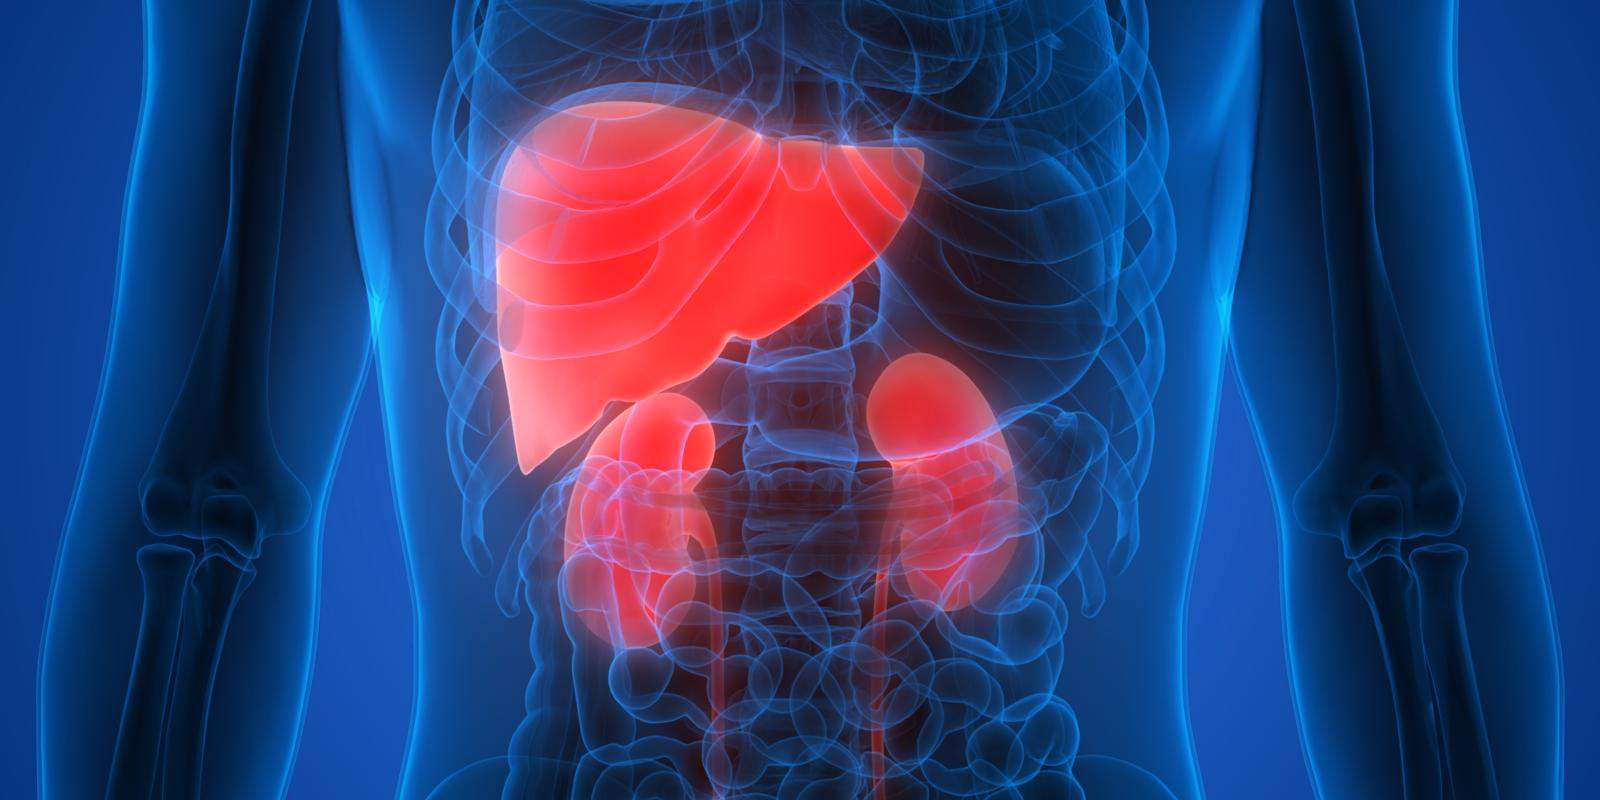 Human body anatomy liver and kidneys